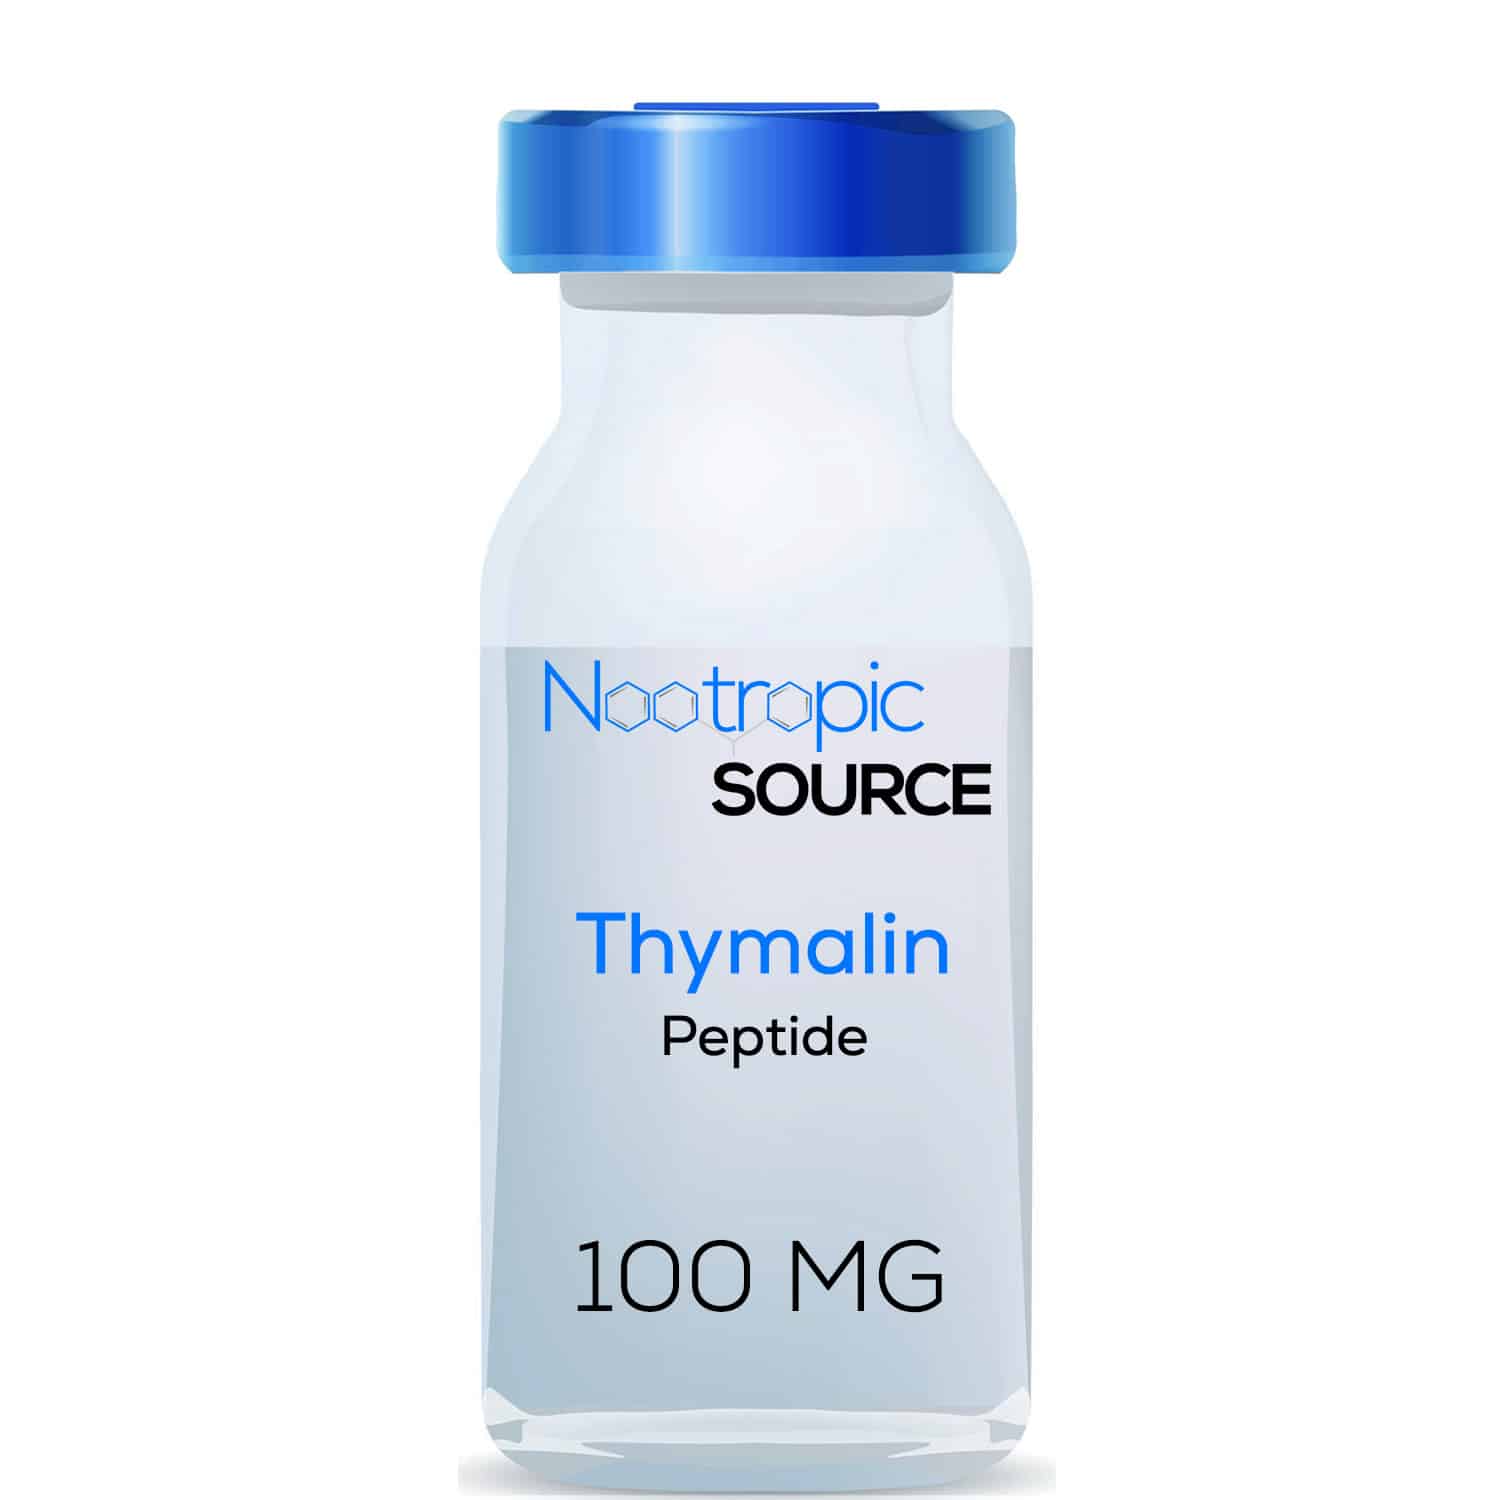 Thymalin Peptide